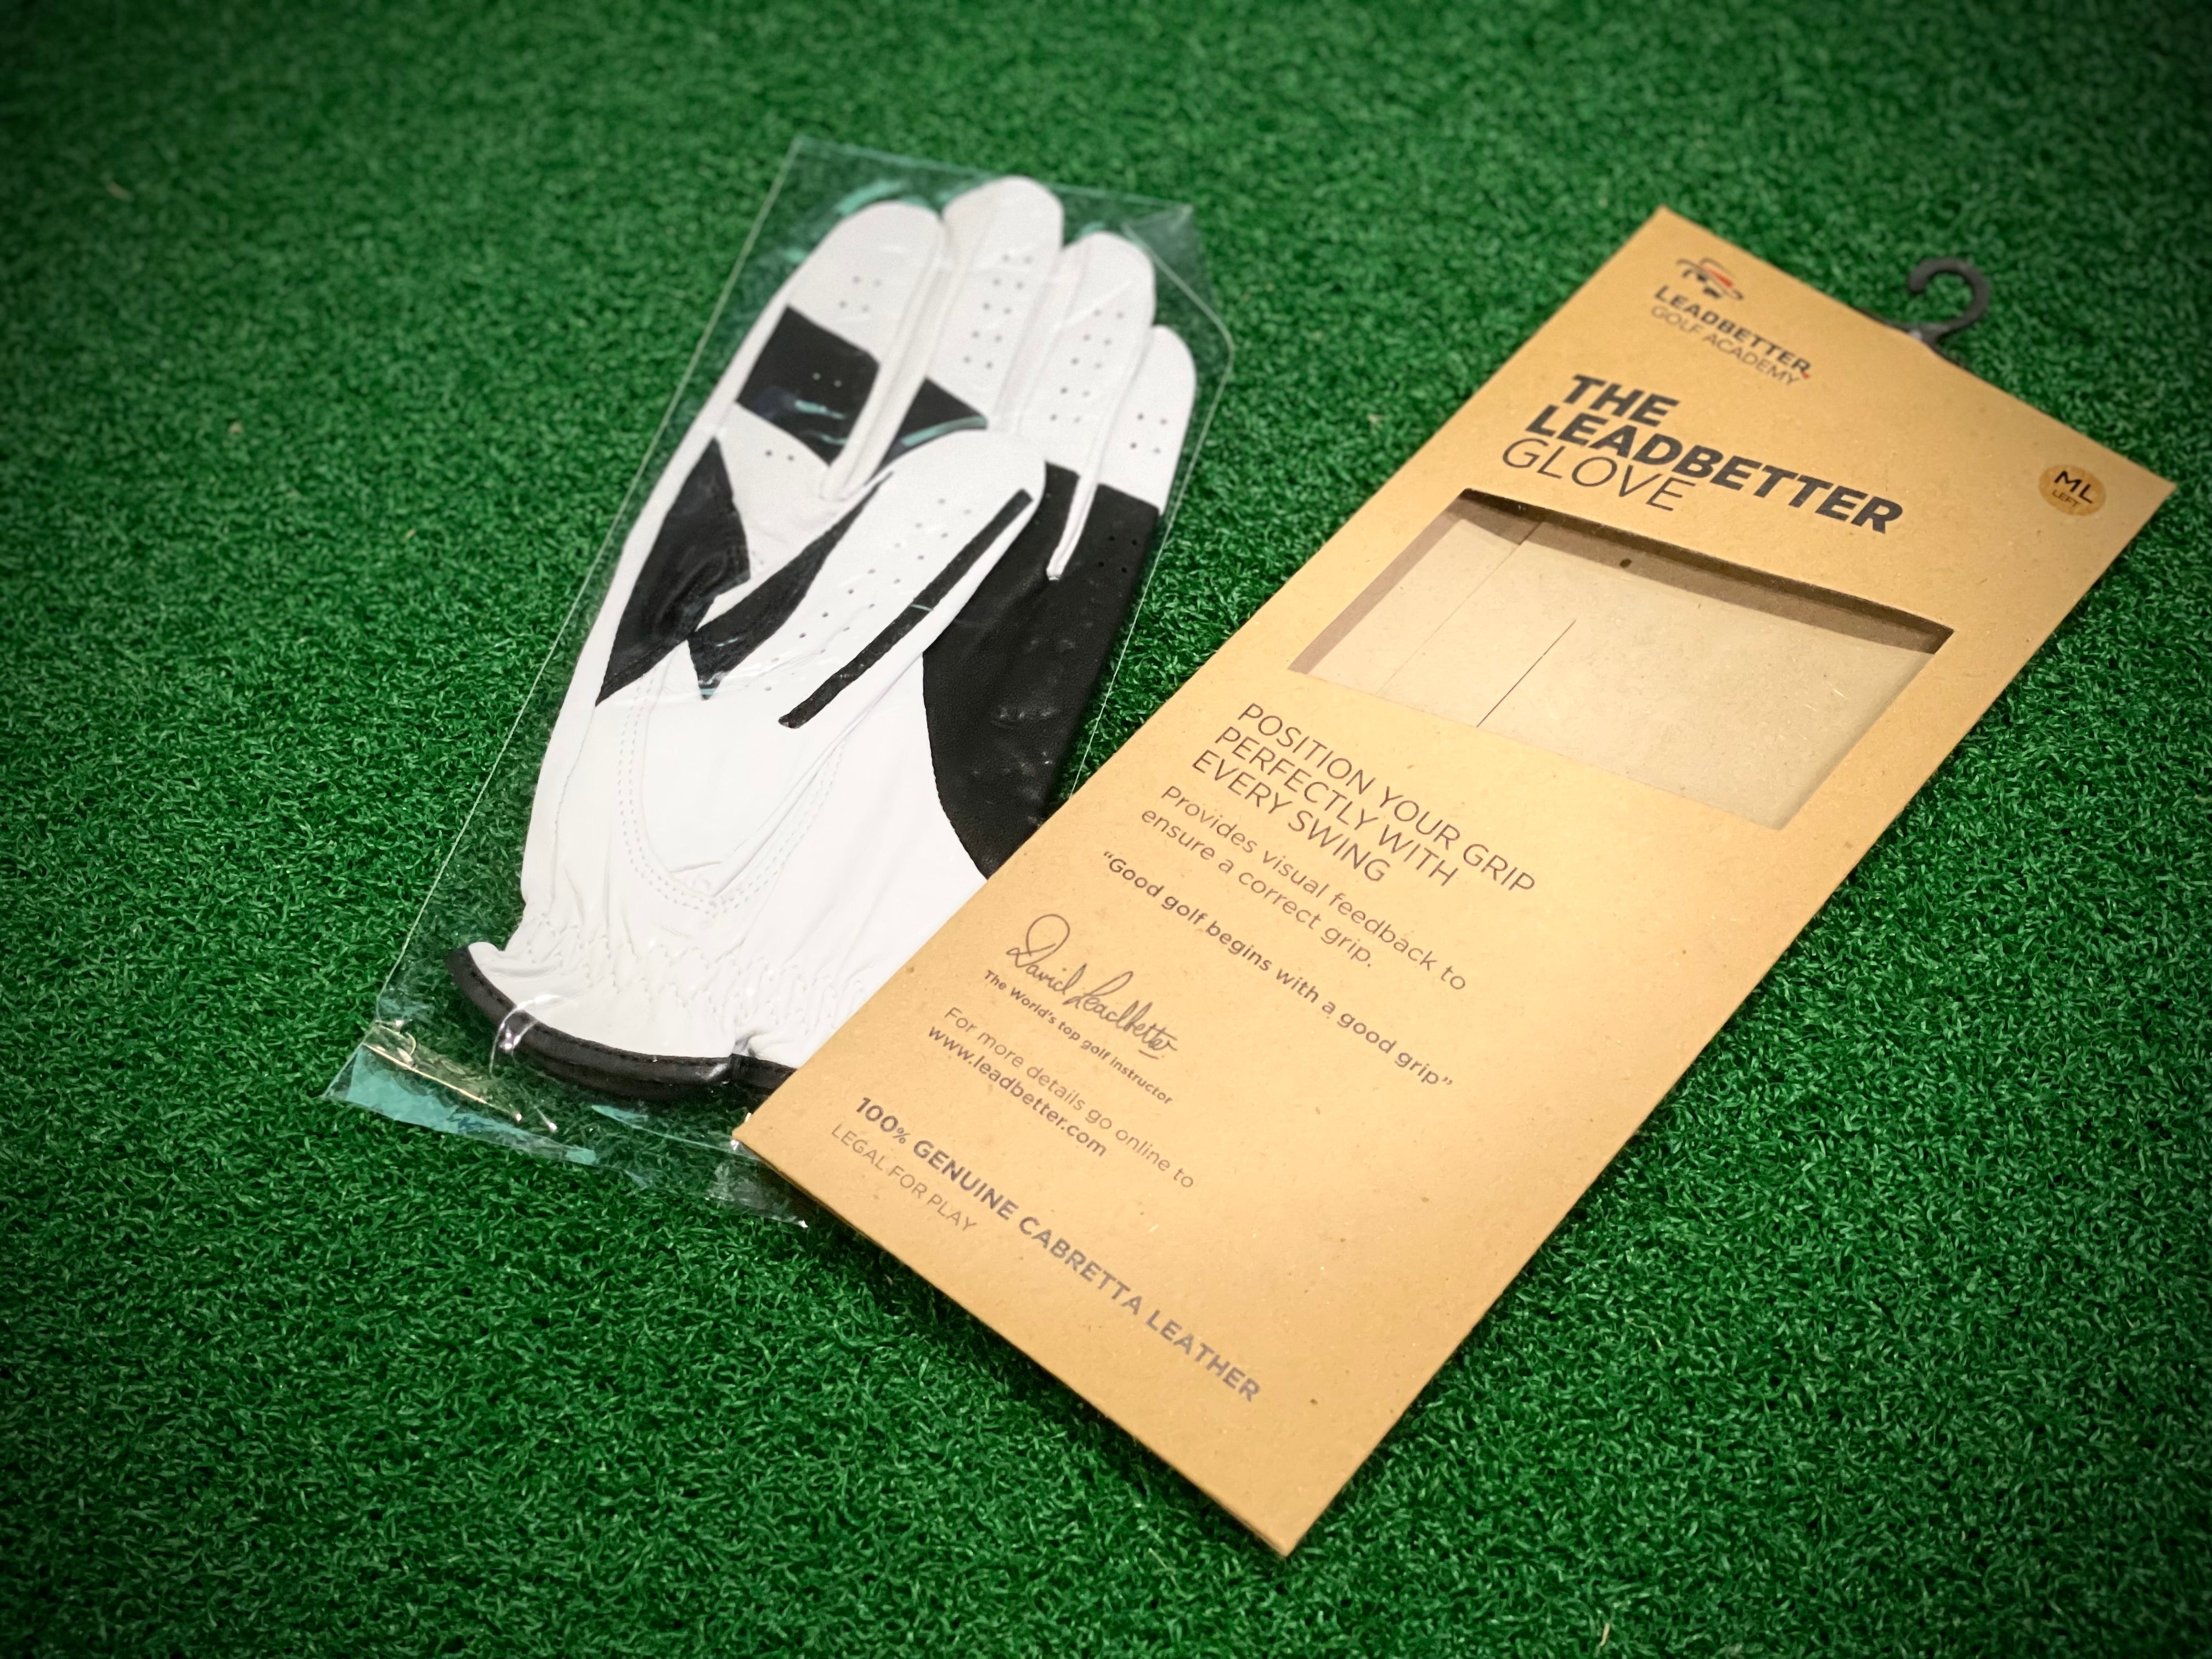 The Leadbetter Glove